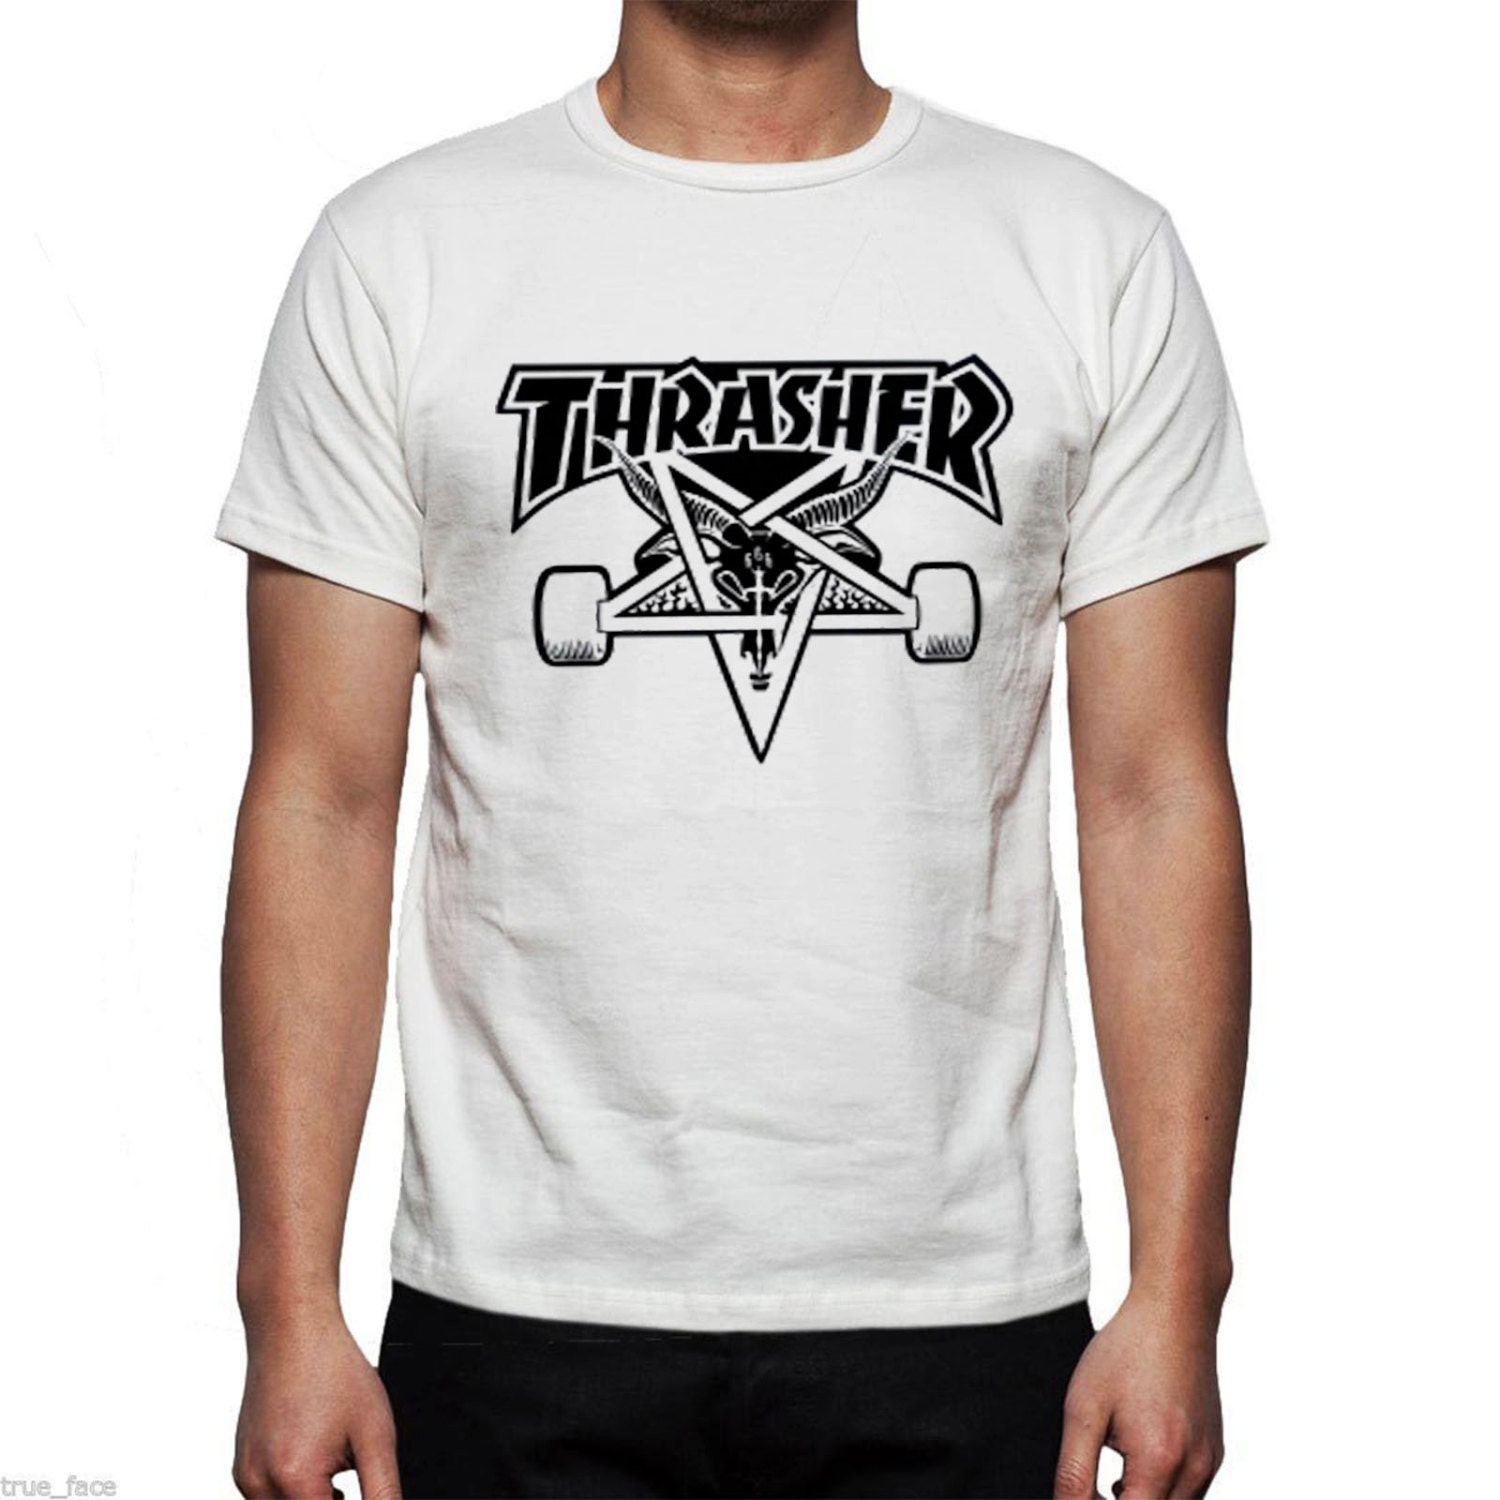 thrasher t shirt men's unisex skateboard t-shirt birthday